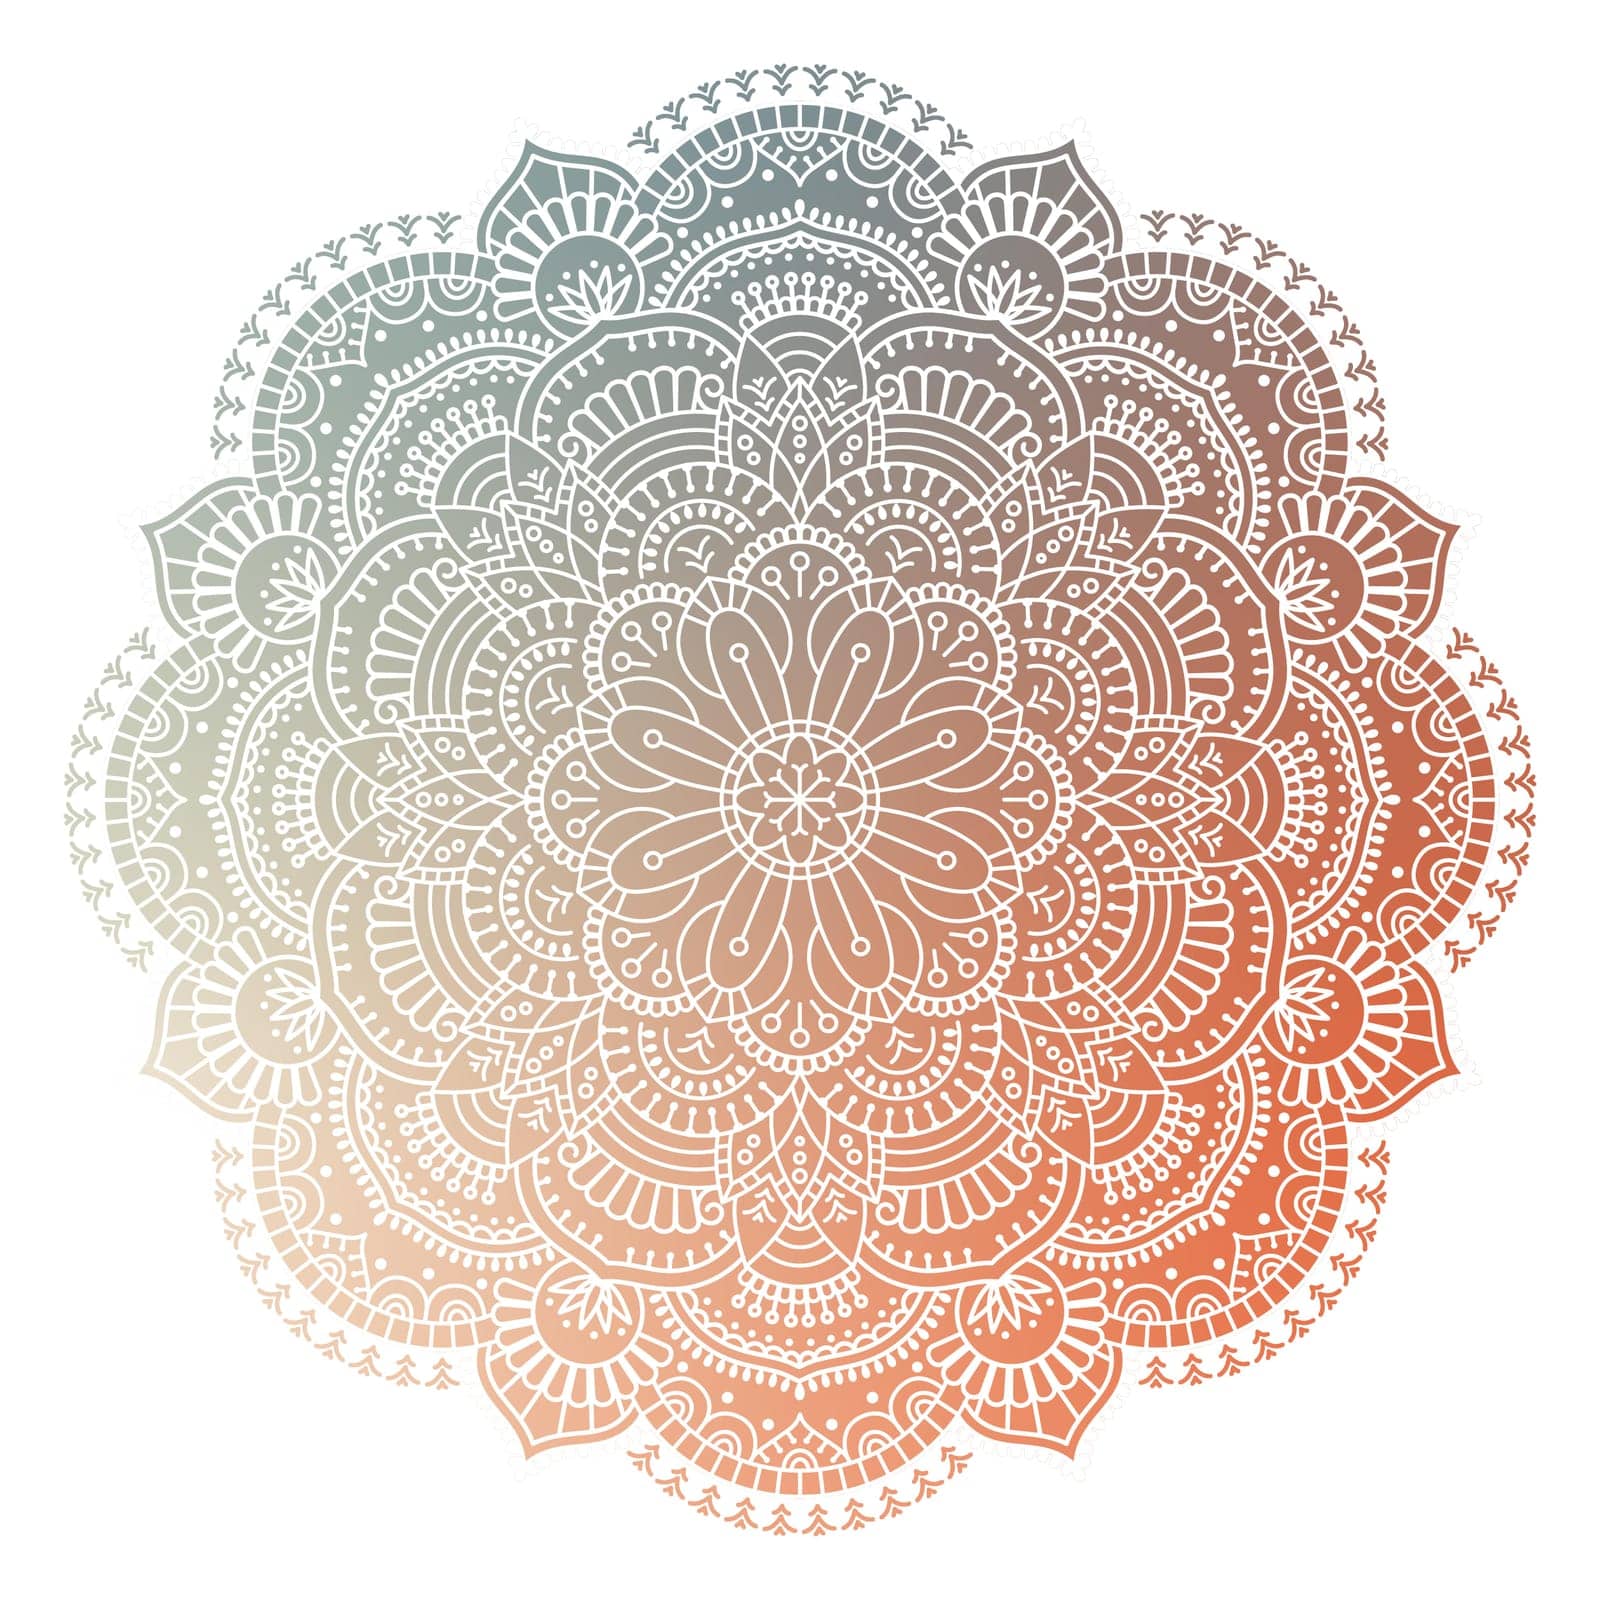 Mandala on white background. Round Ornament Pattern. Indian. Arabic, Islam ornament, Buddhism culture symbol.